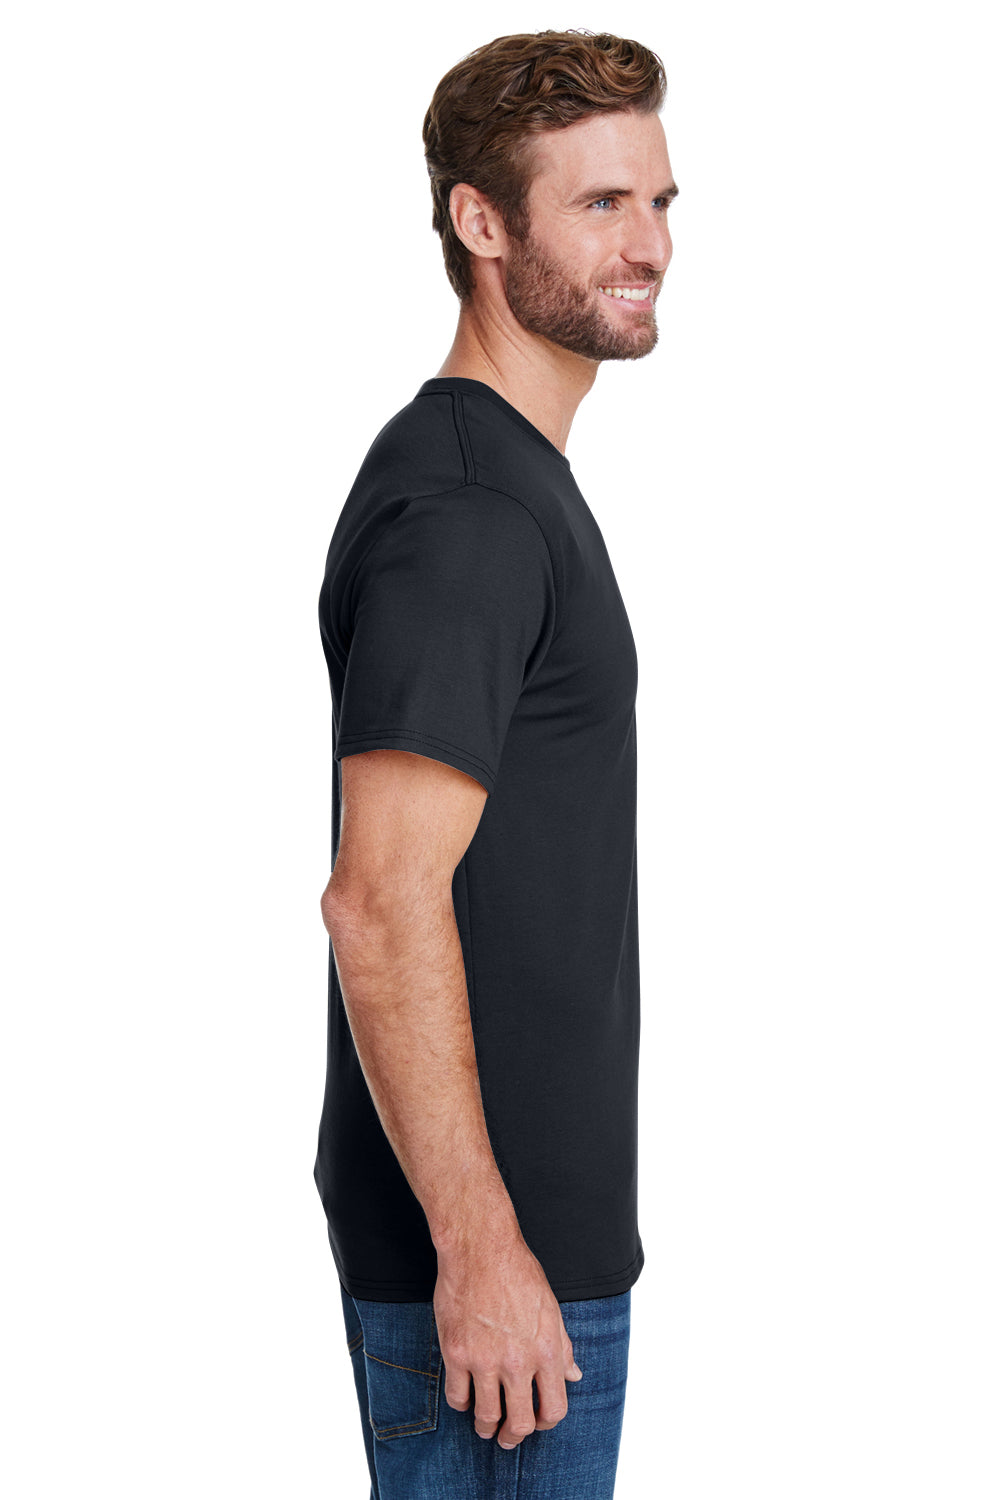 Hanes W110 Mens Workwear Short Sleeve Crewneck T-Shirt w/ Pocket Black Side